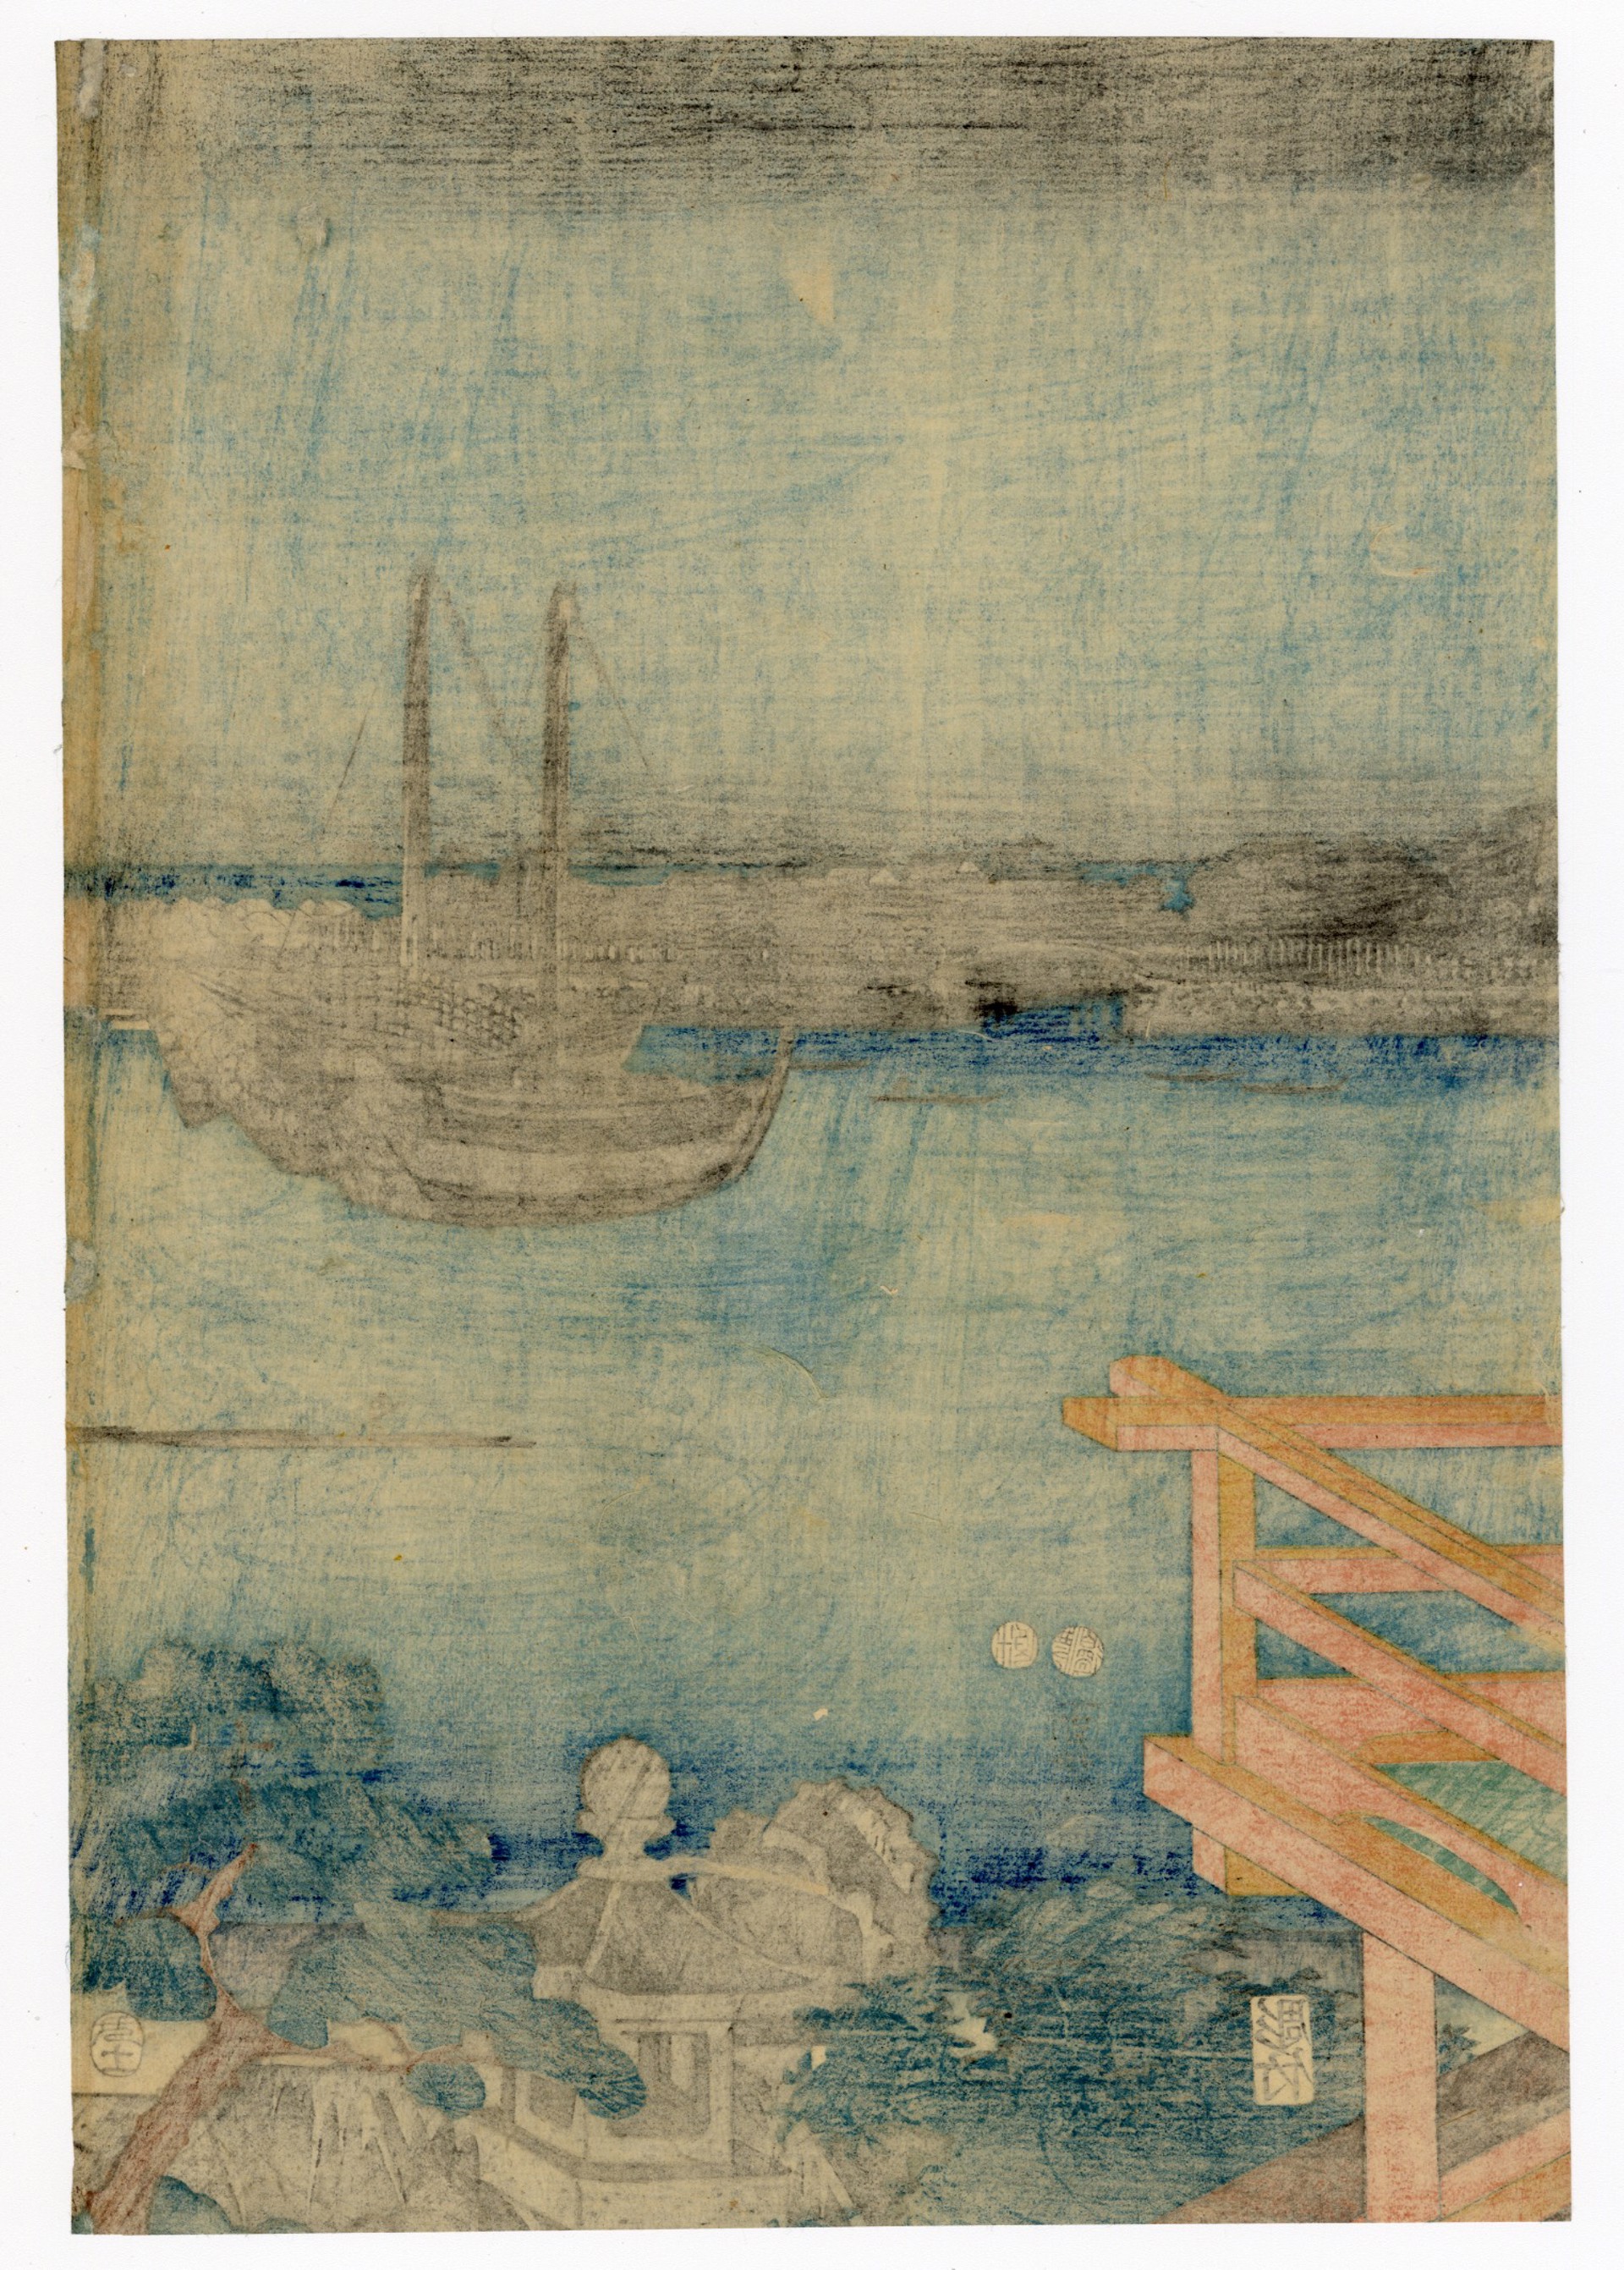 Tsukuda by Hiroshige & Kunisada